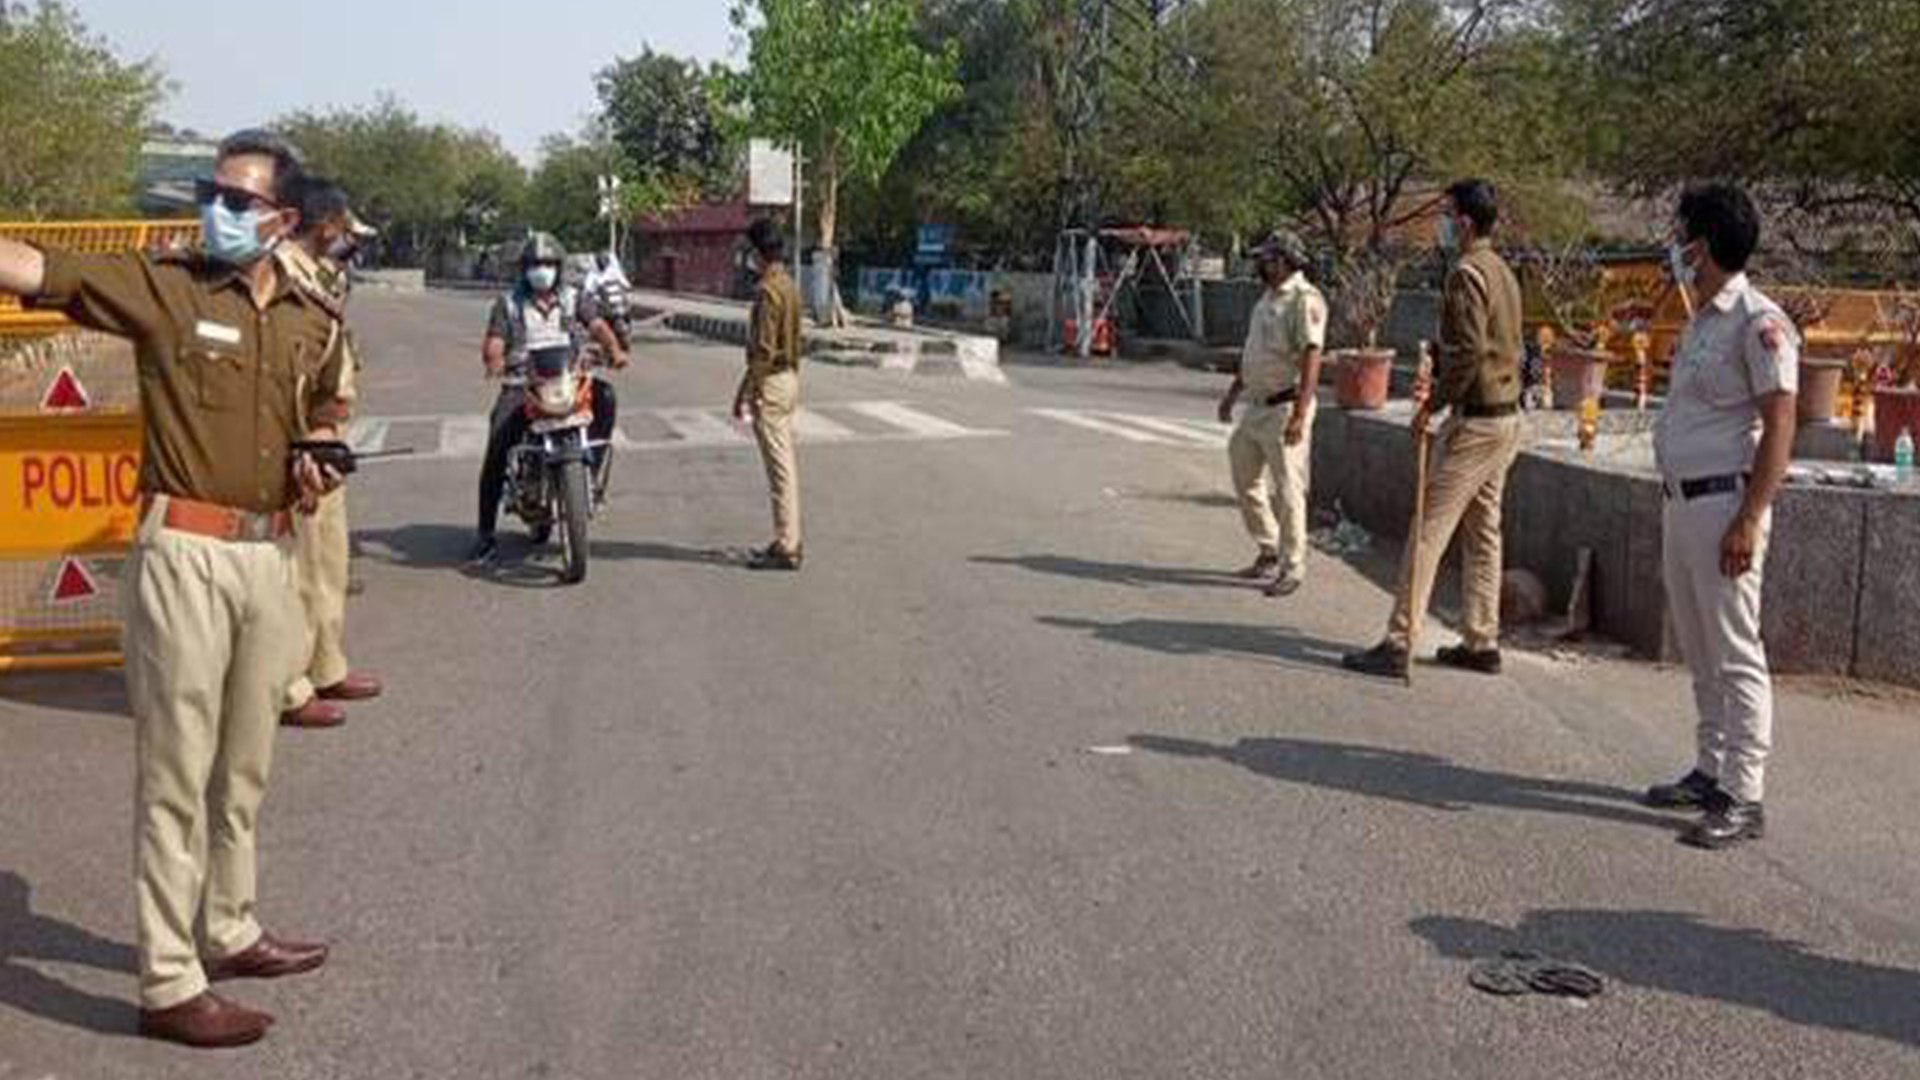 Curfew in Ahmedabad, India